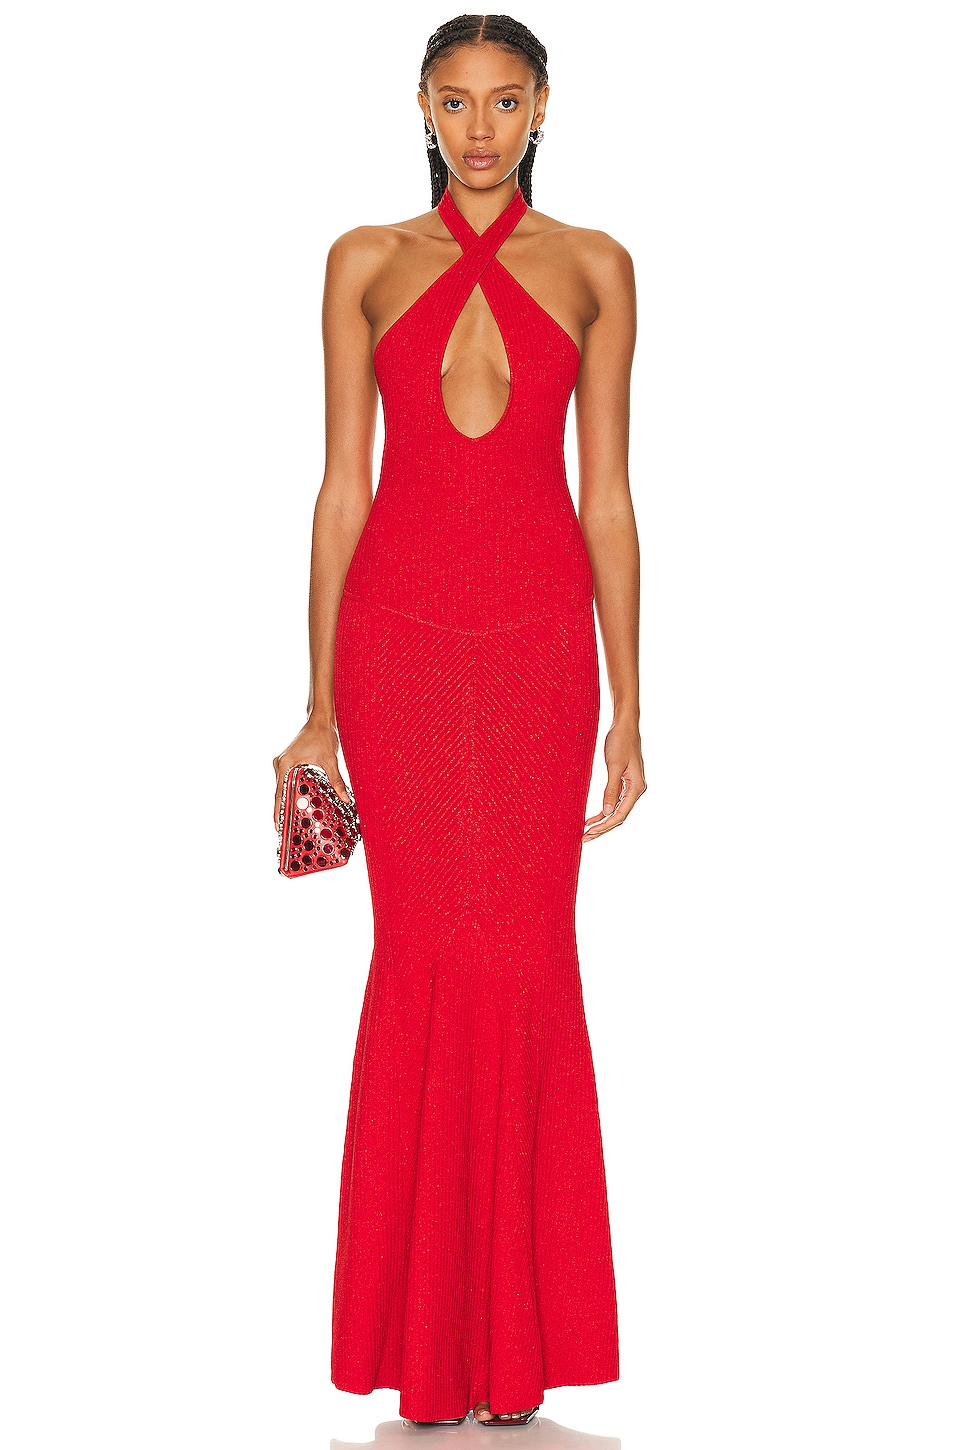 Verona Dress in Red